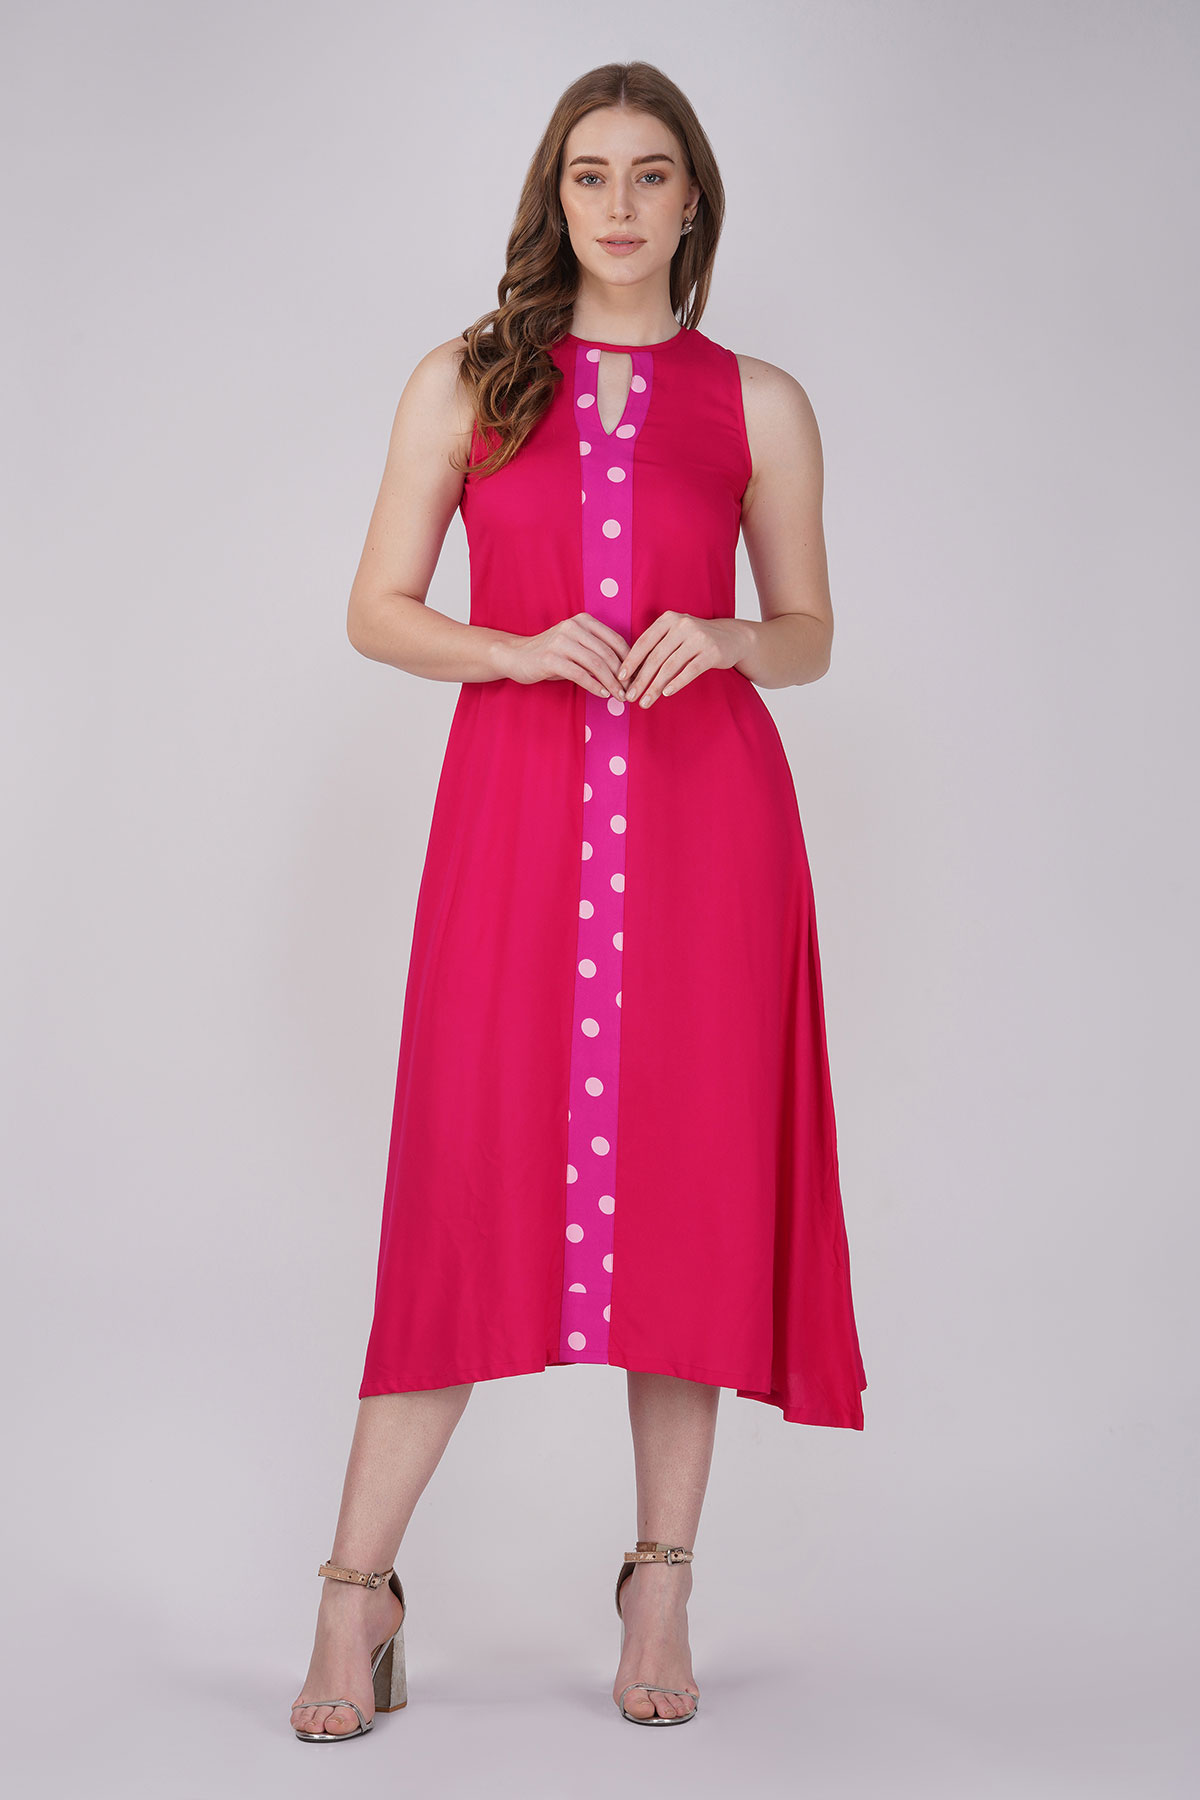 Hot Pink Polka Stripe Dress